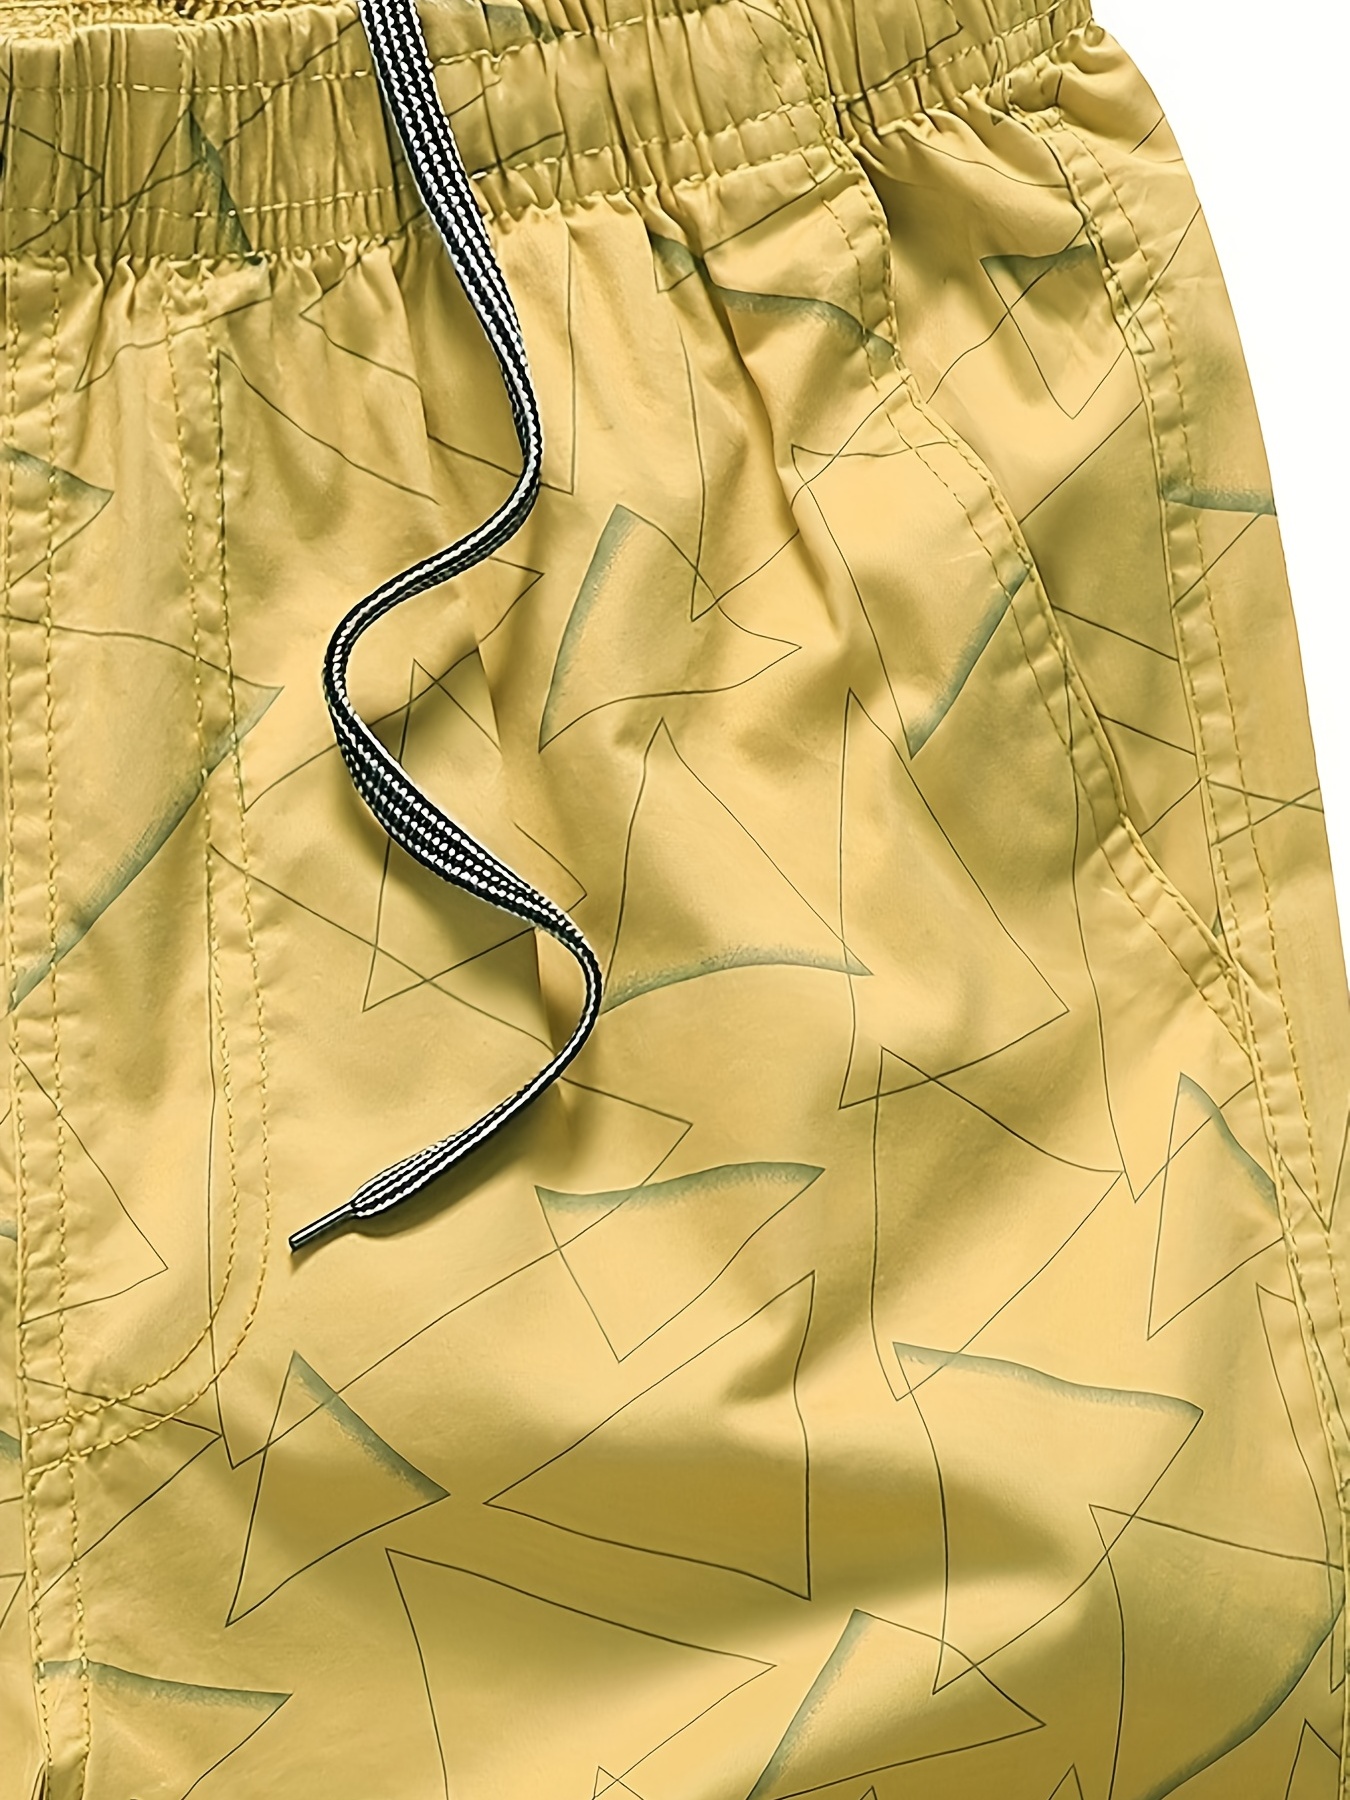  Yellow - Men's Athletic Shorts / Men's Activewear